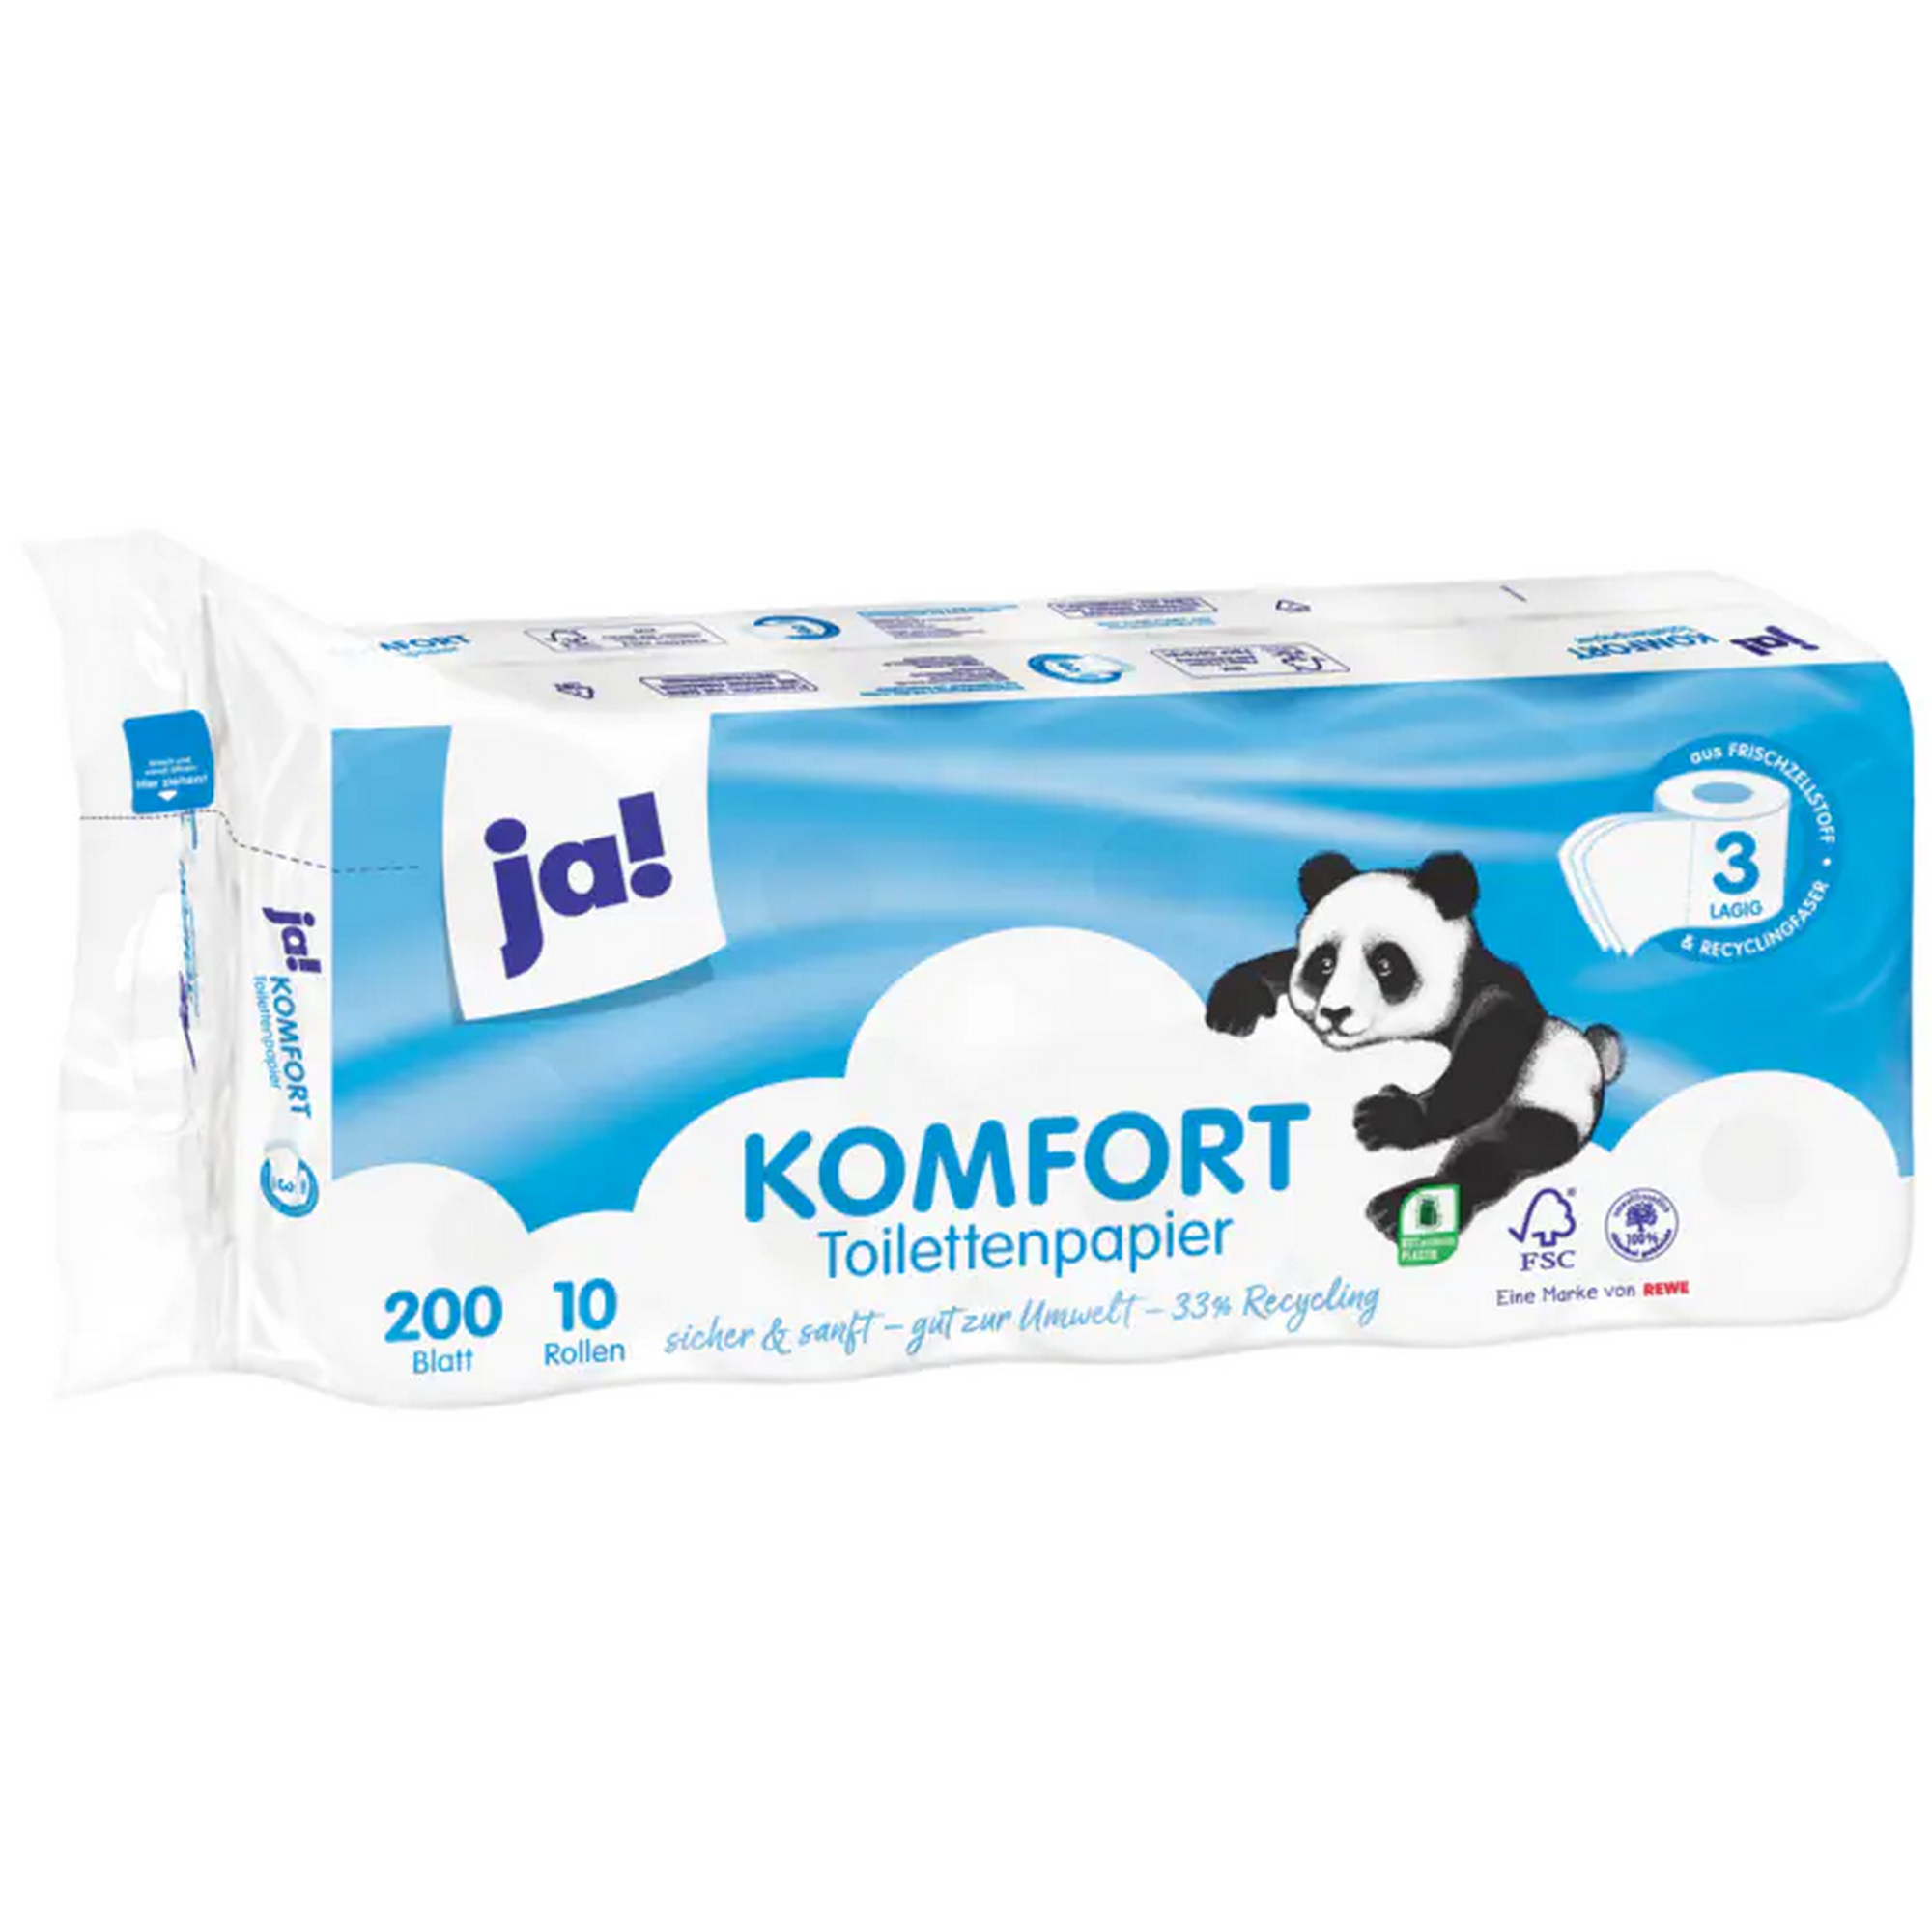 Komfort-Toilettenpapier 3-lagig 10 x 200 Blatt + product picture